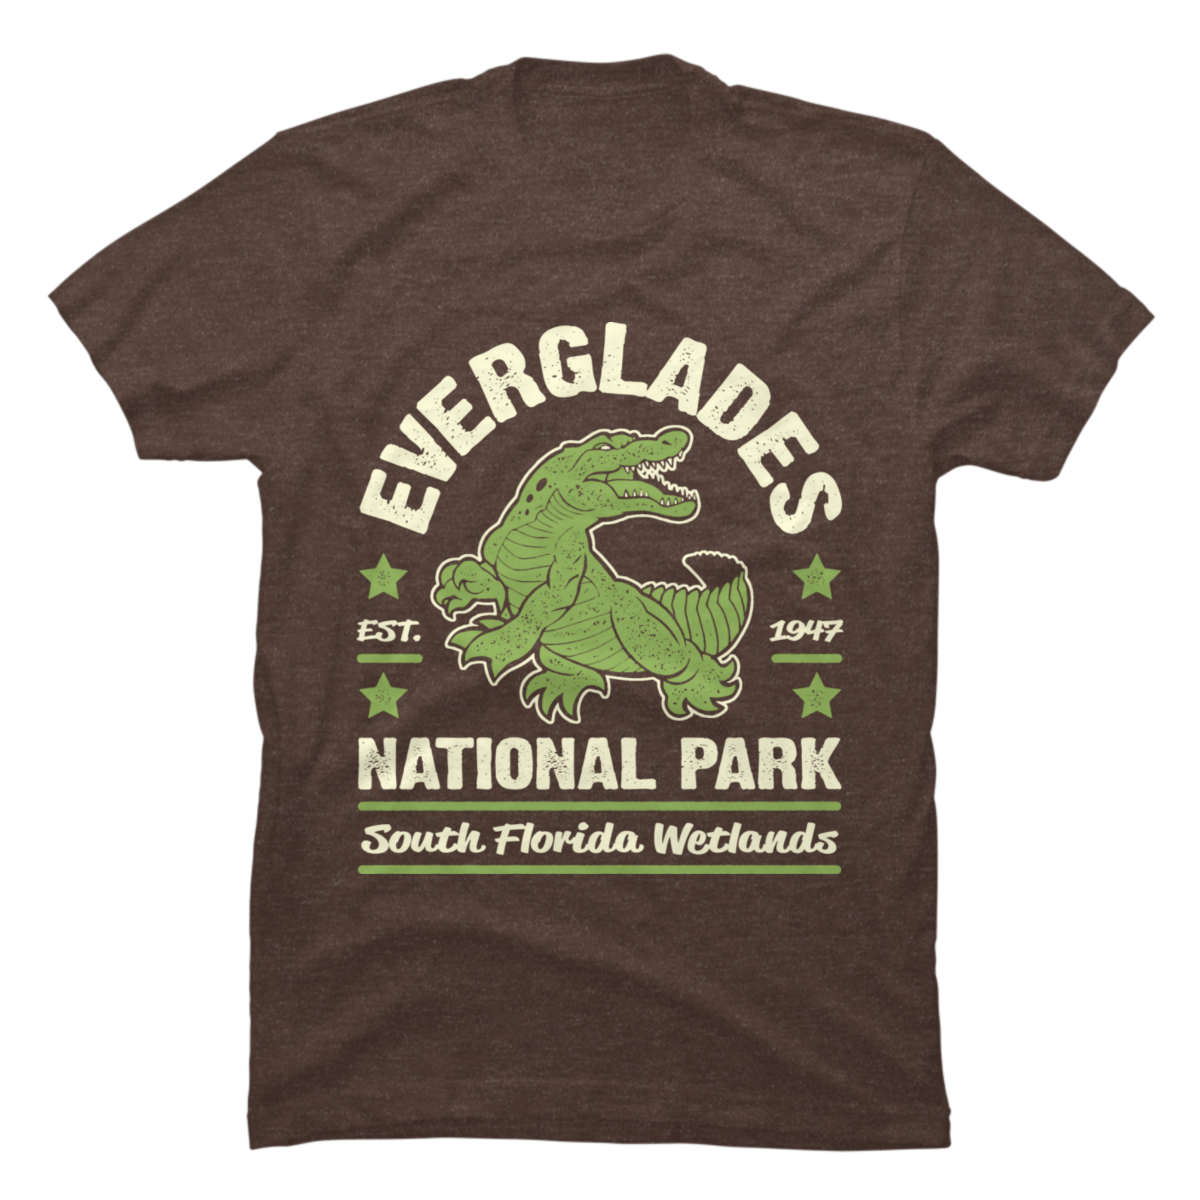 everglades national park t-shirt